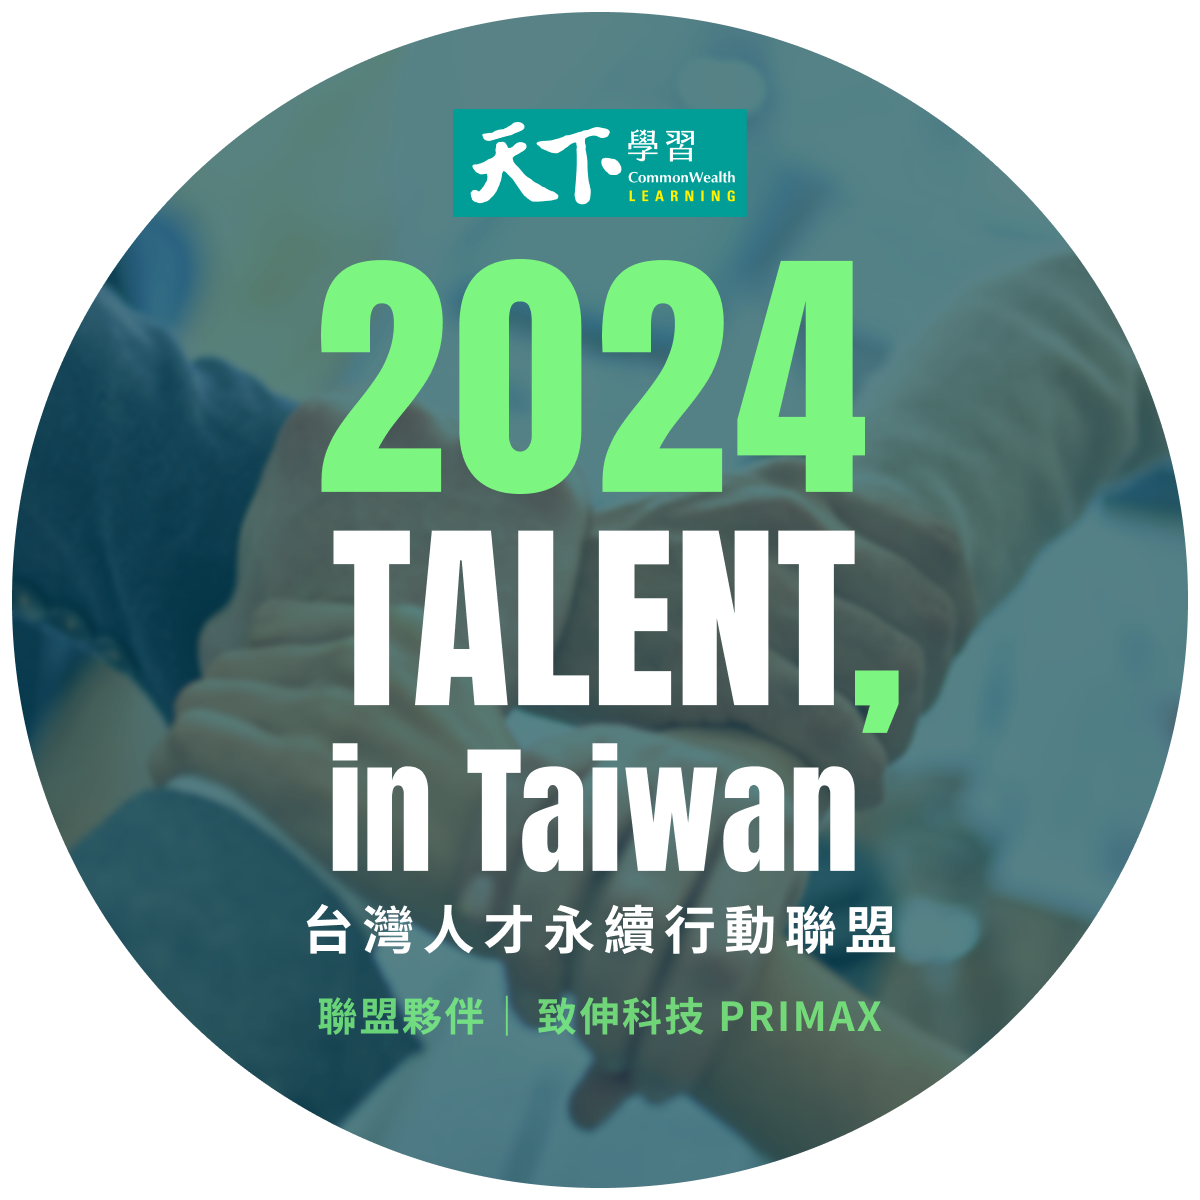 Talent in Taiwan 2024